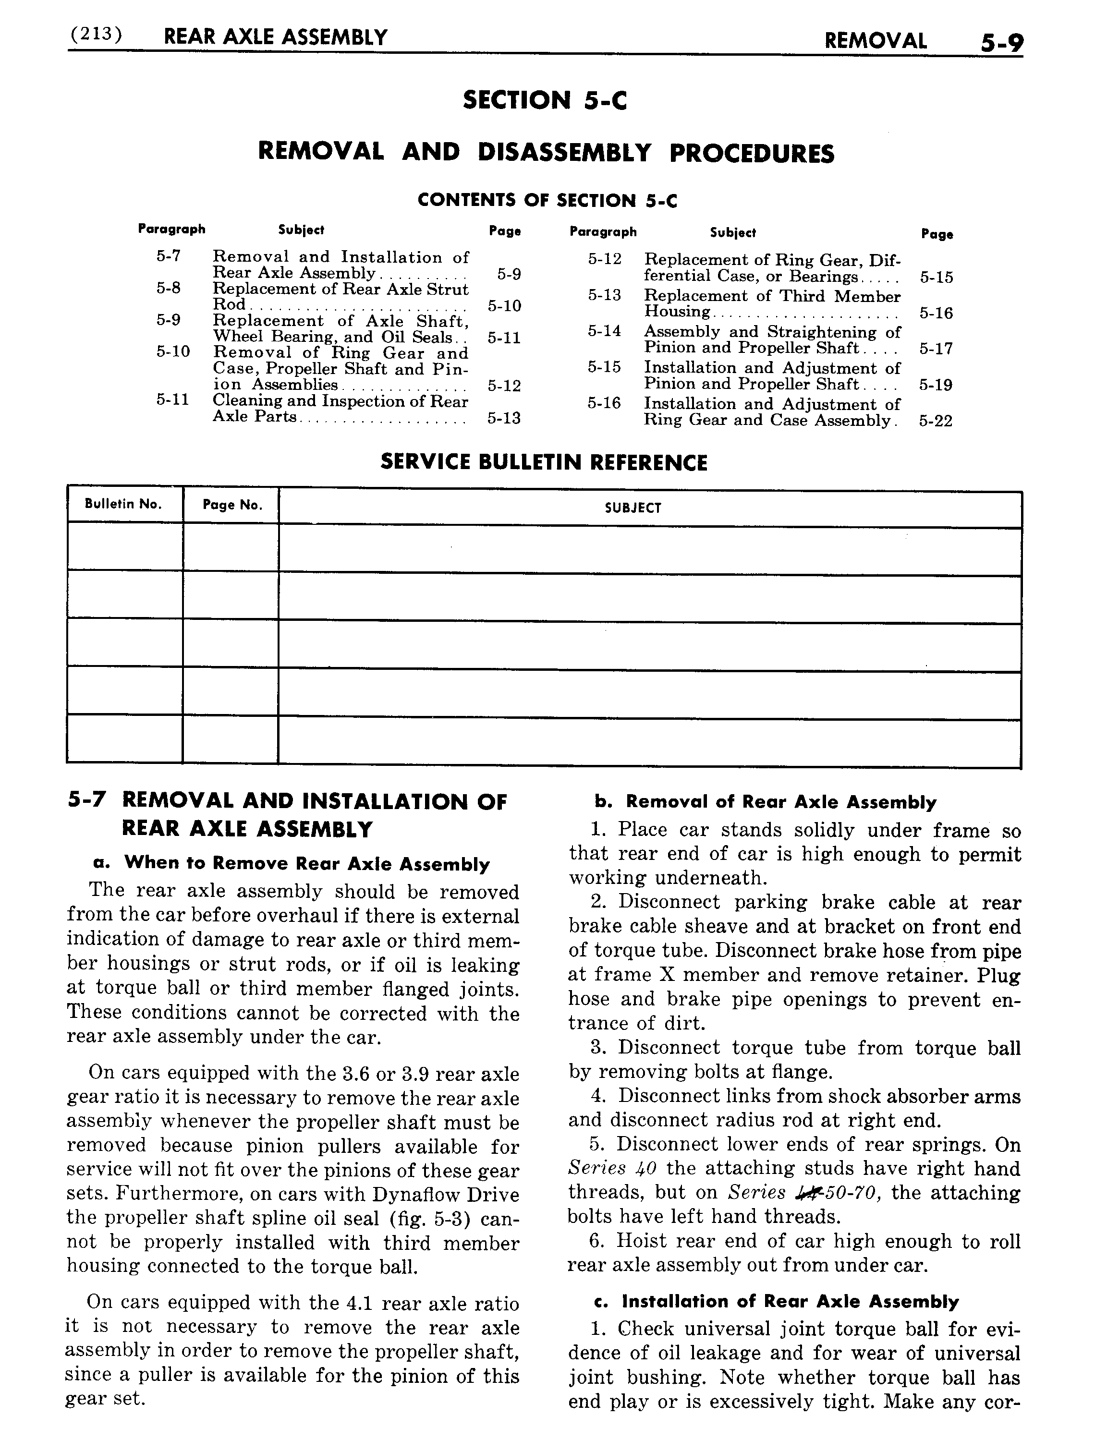 n_06 1951 Buick Shop Manual - Rear Axle-009-009.jpg